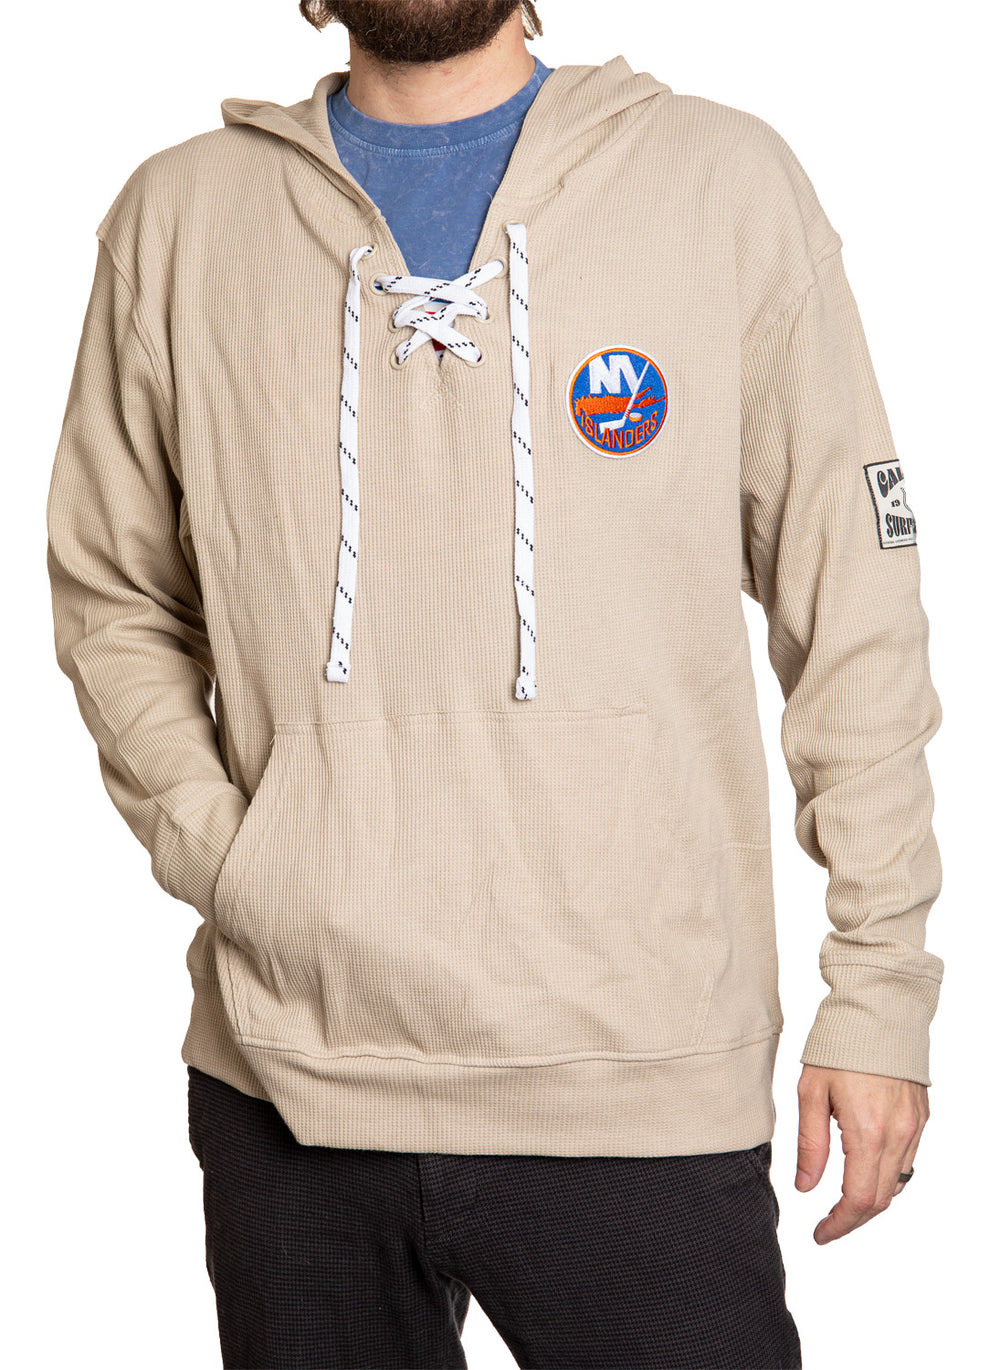 New York Islanders NHL Special Zombie Style For Halloween Hoodie T Shirt -  Growkoc